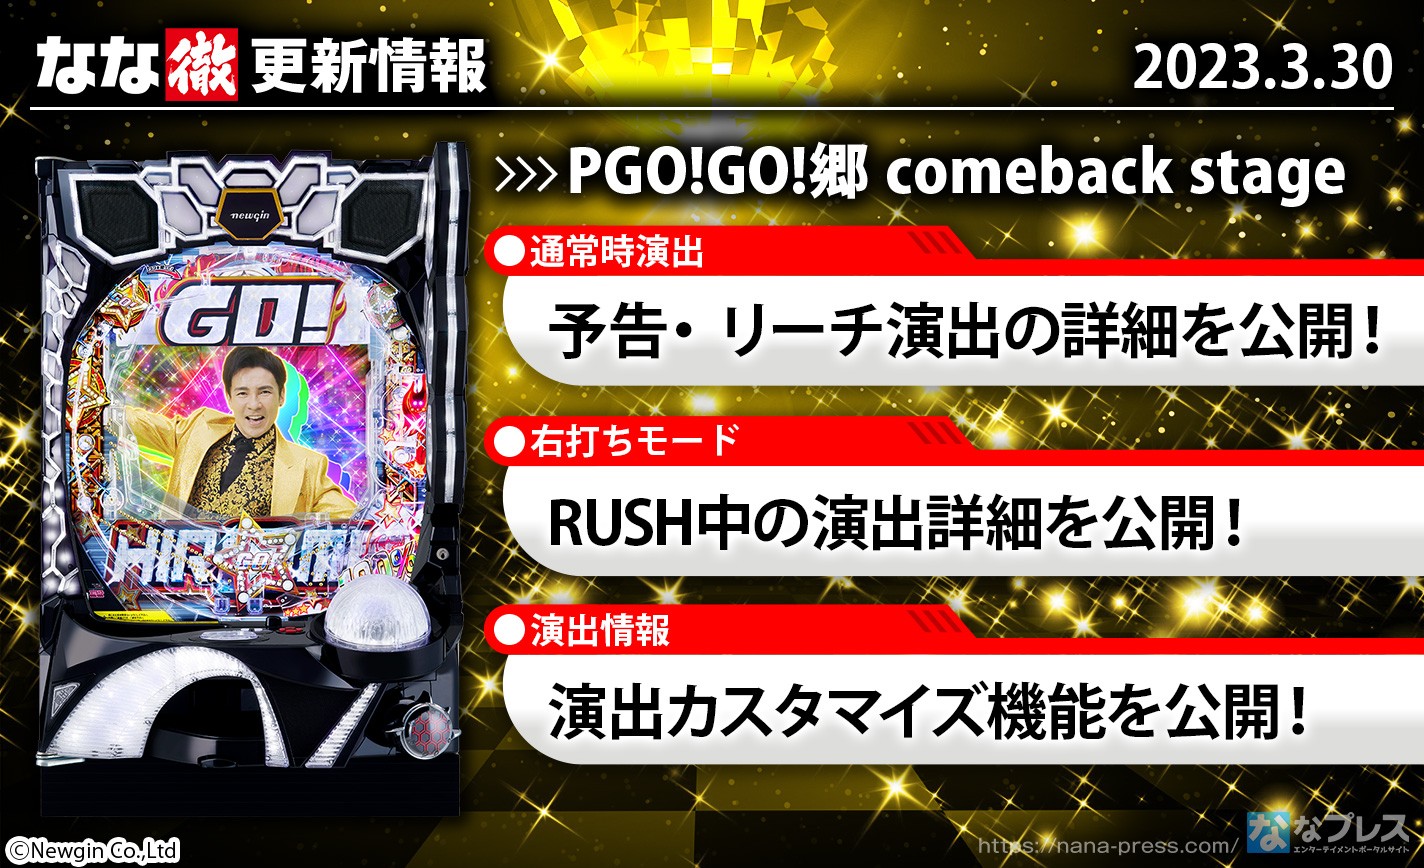 【PGO!GO!郷 Comeback Stage】演出詳細・信頼度を更新しました。【3月30日解析情報更新】 eyecatch-image